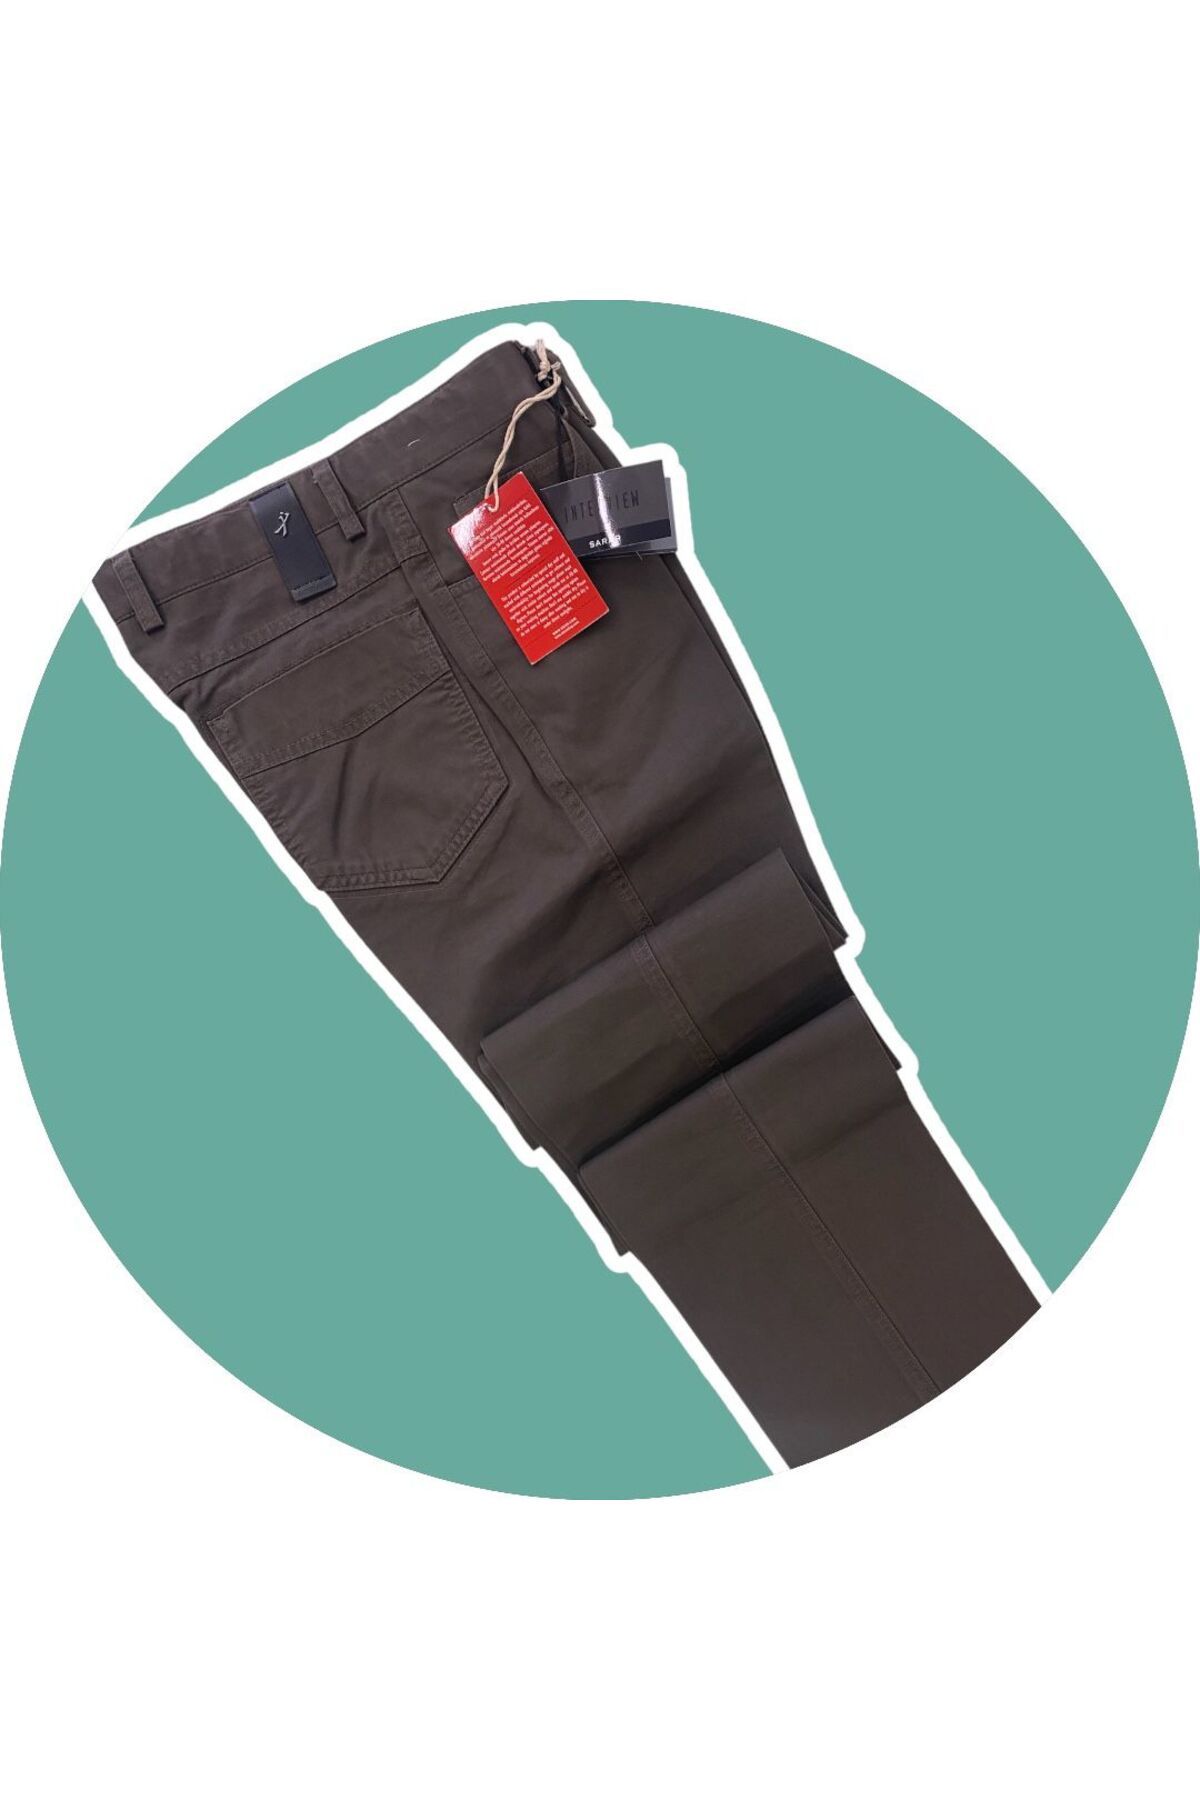 Sarar İnterview Sarar %100 Pamuk Klasik Kalıp Kahverengi Koton Pantolon 42 Model-3 2B245